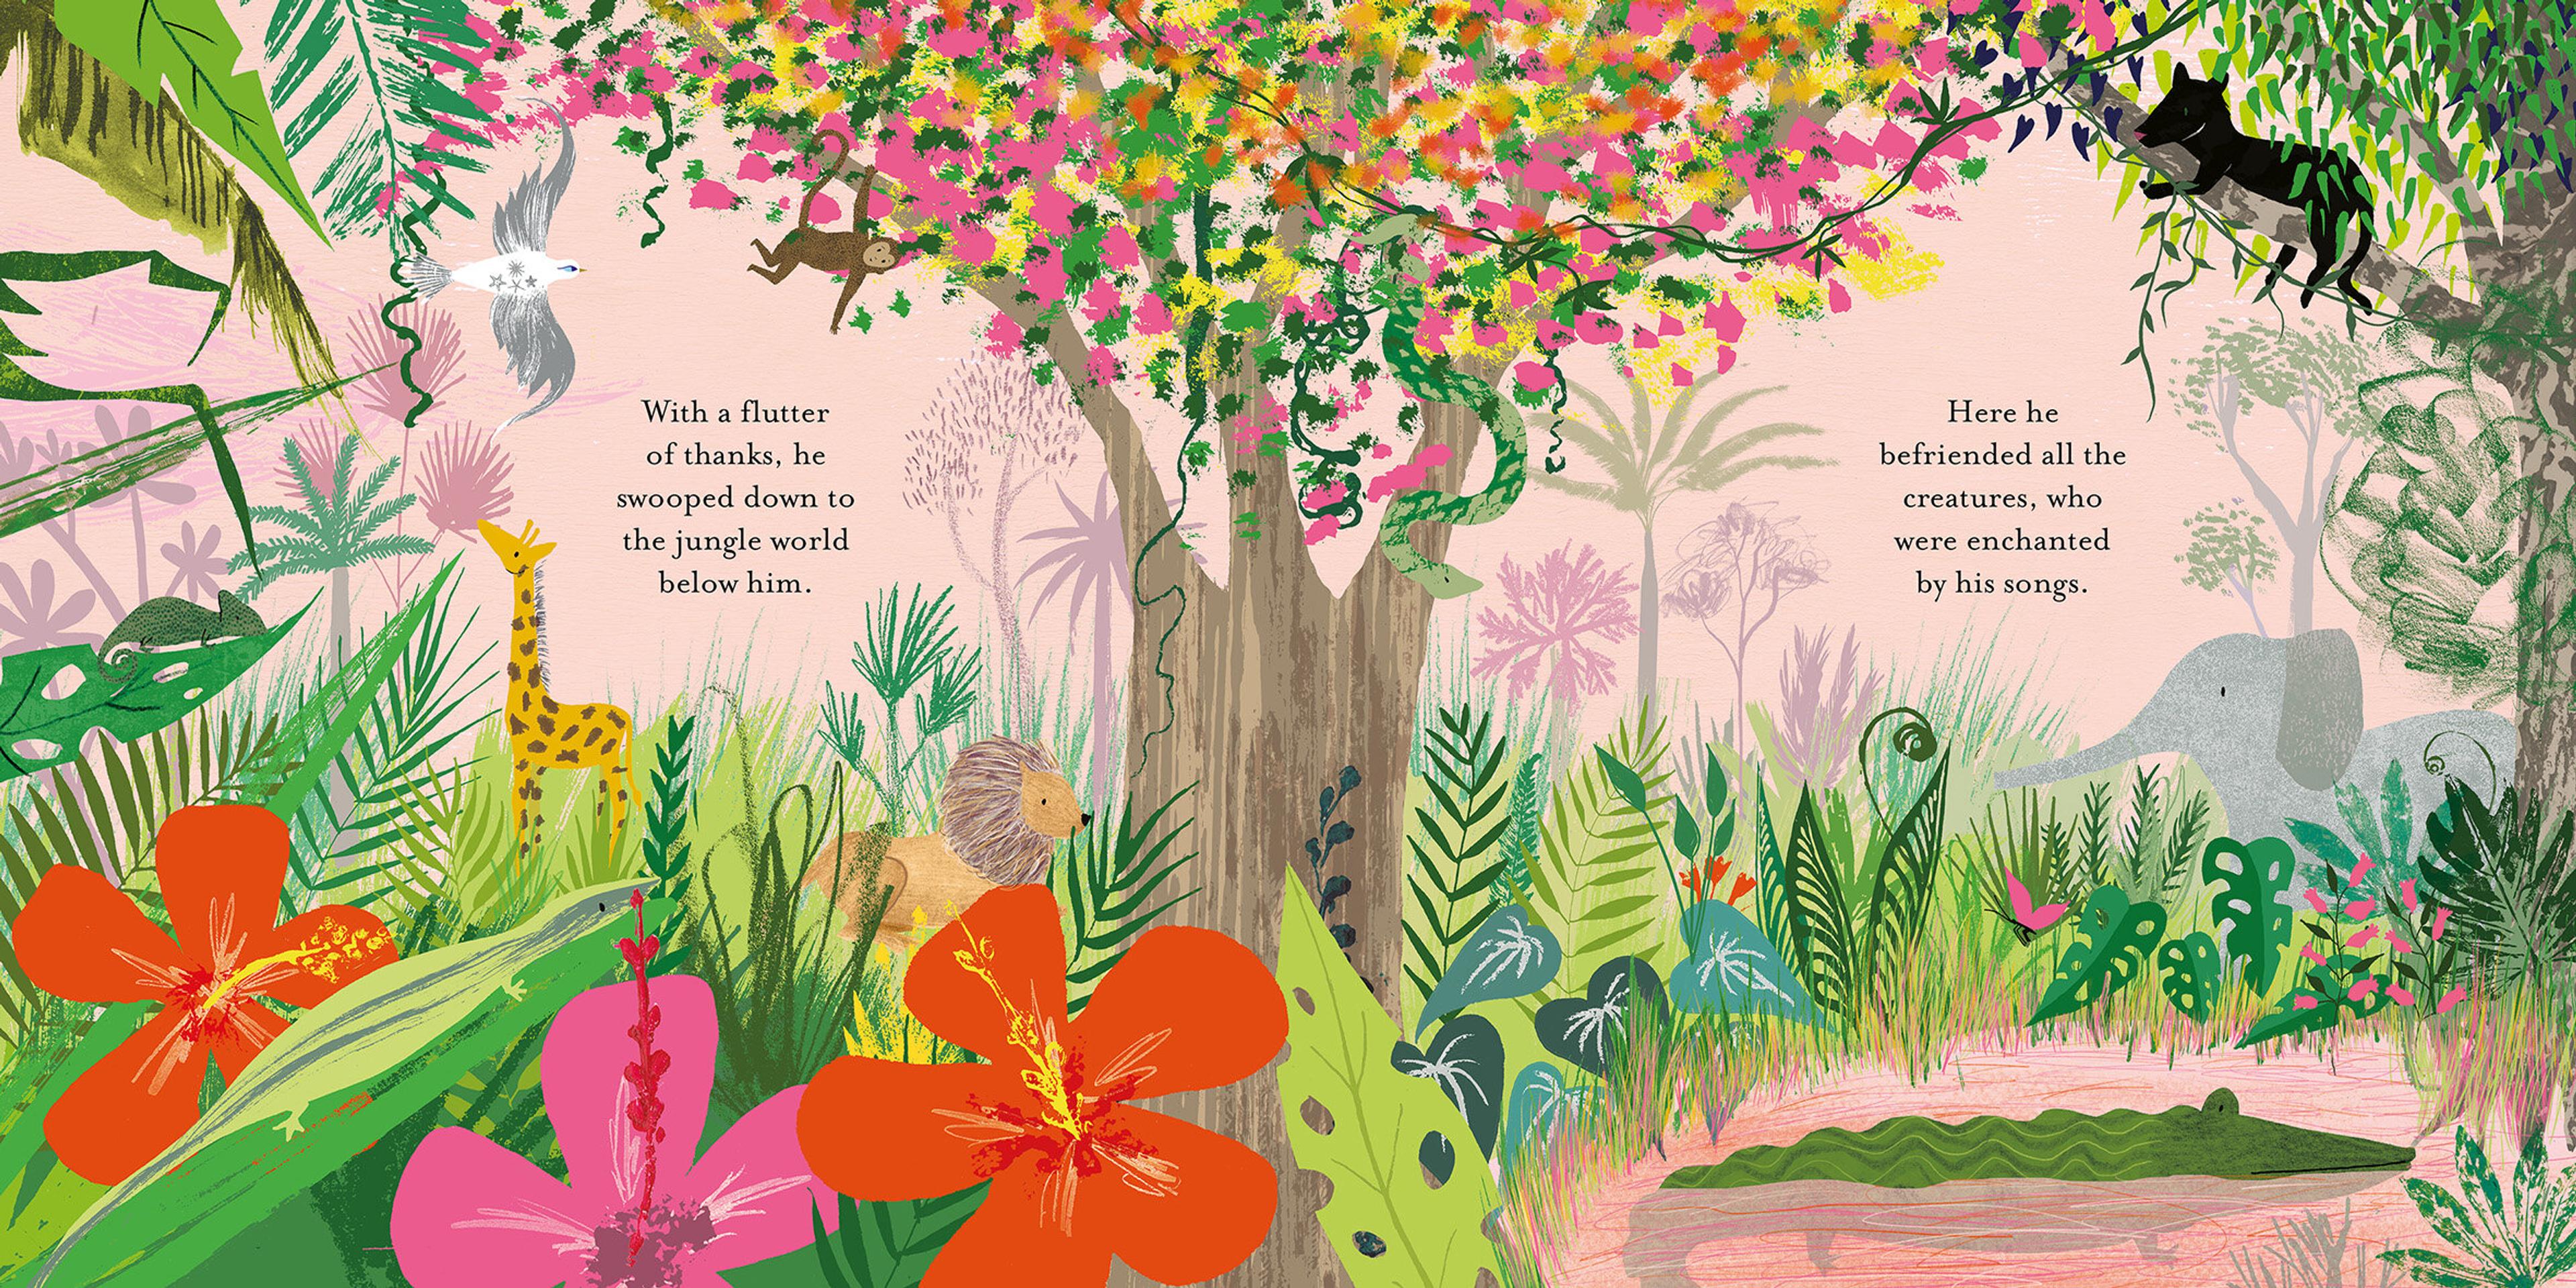 Illustration of a jungle